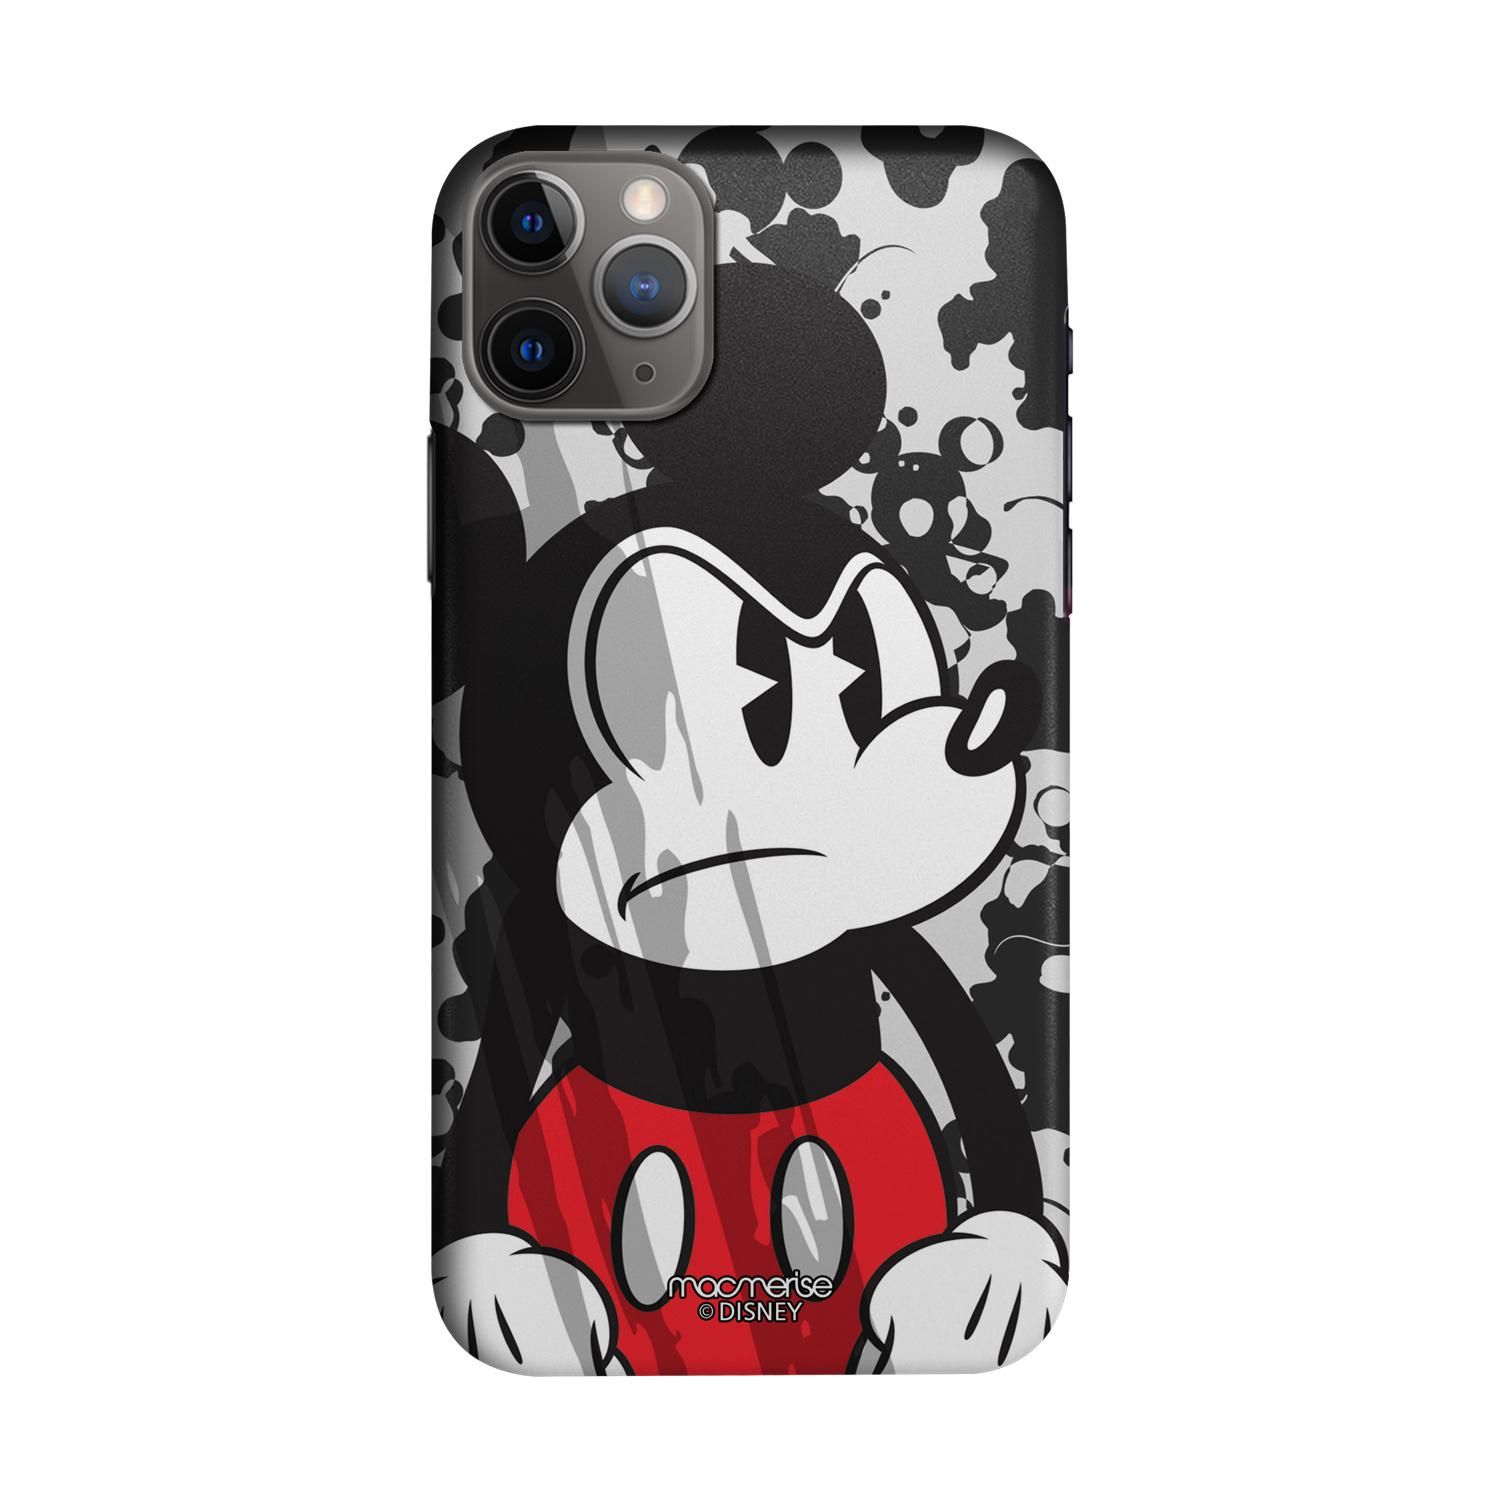 Buy Grumpy Mickey - Sleek Phone Case for iPhone 11 Pro Online